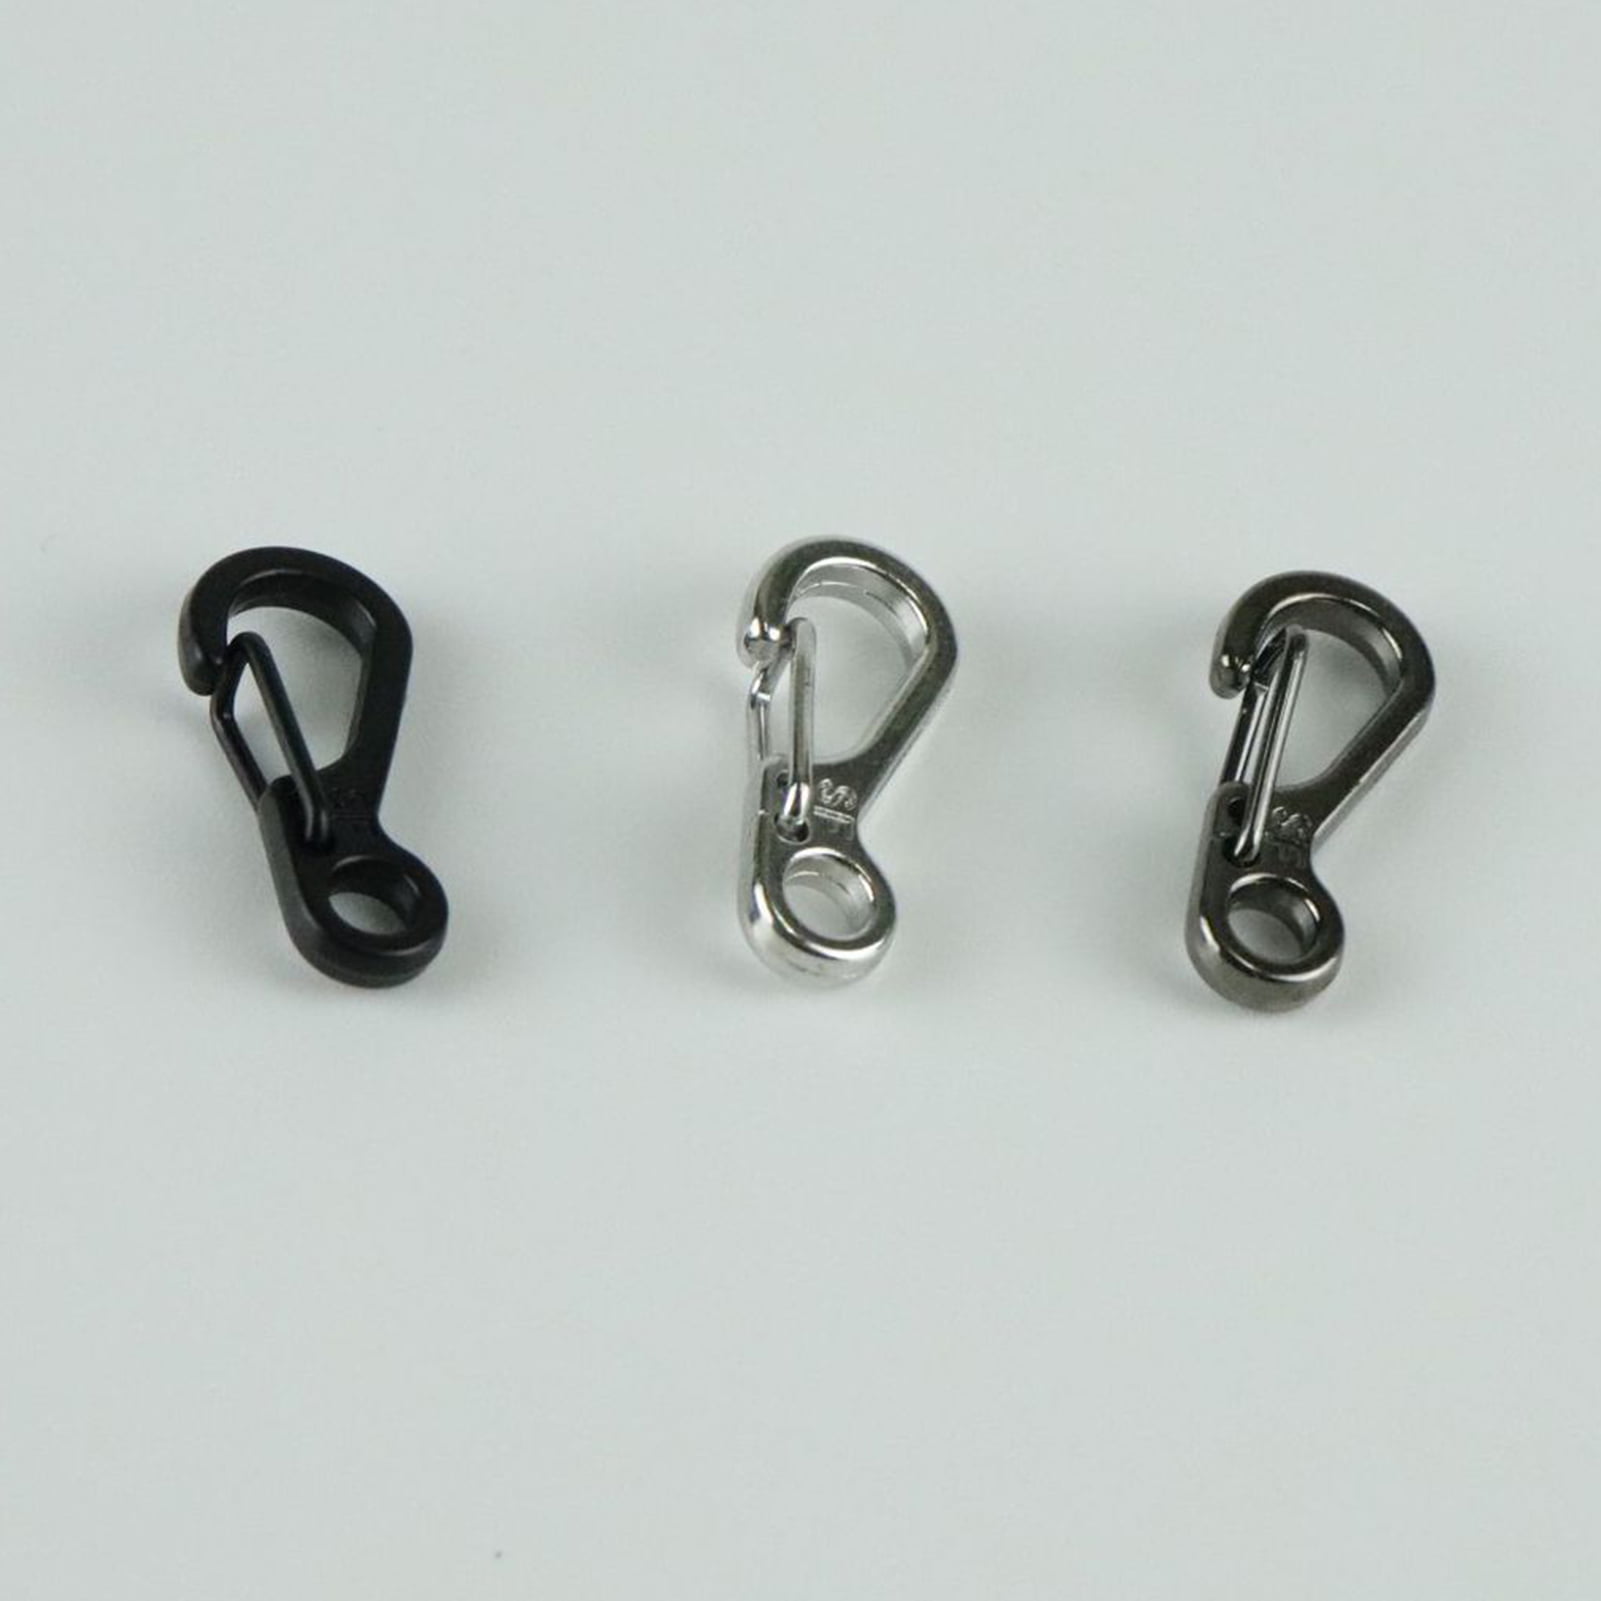 10pcs Carabiner Clip Clasp D-shaped Mini Hook Key Chain Buckles 7 Colors 4*2*1cm 